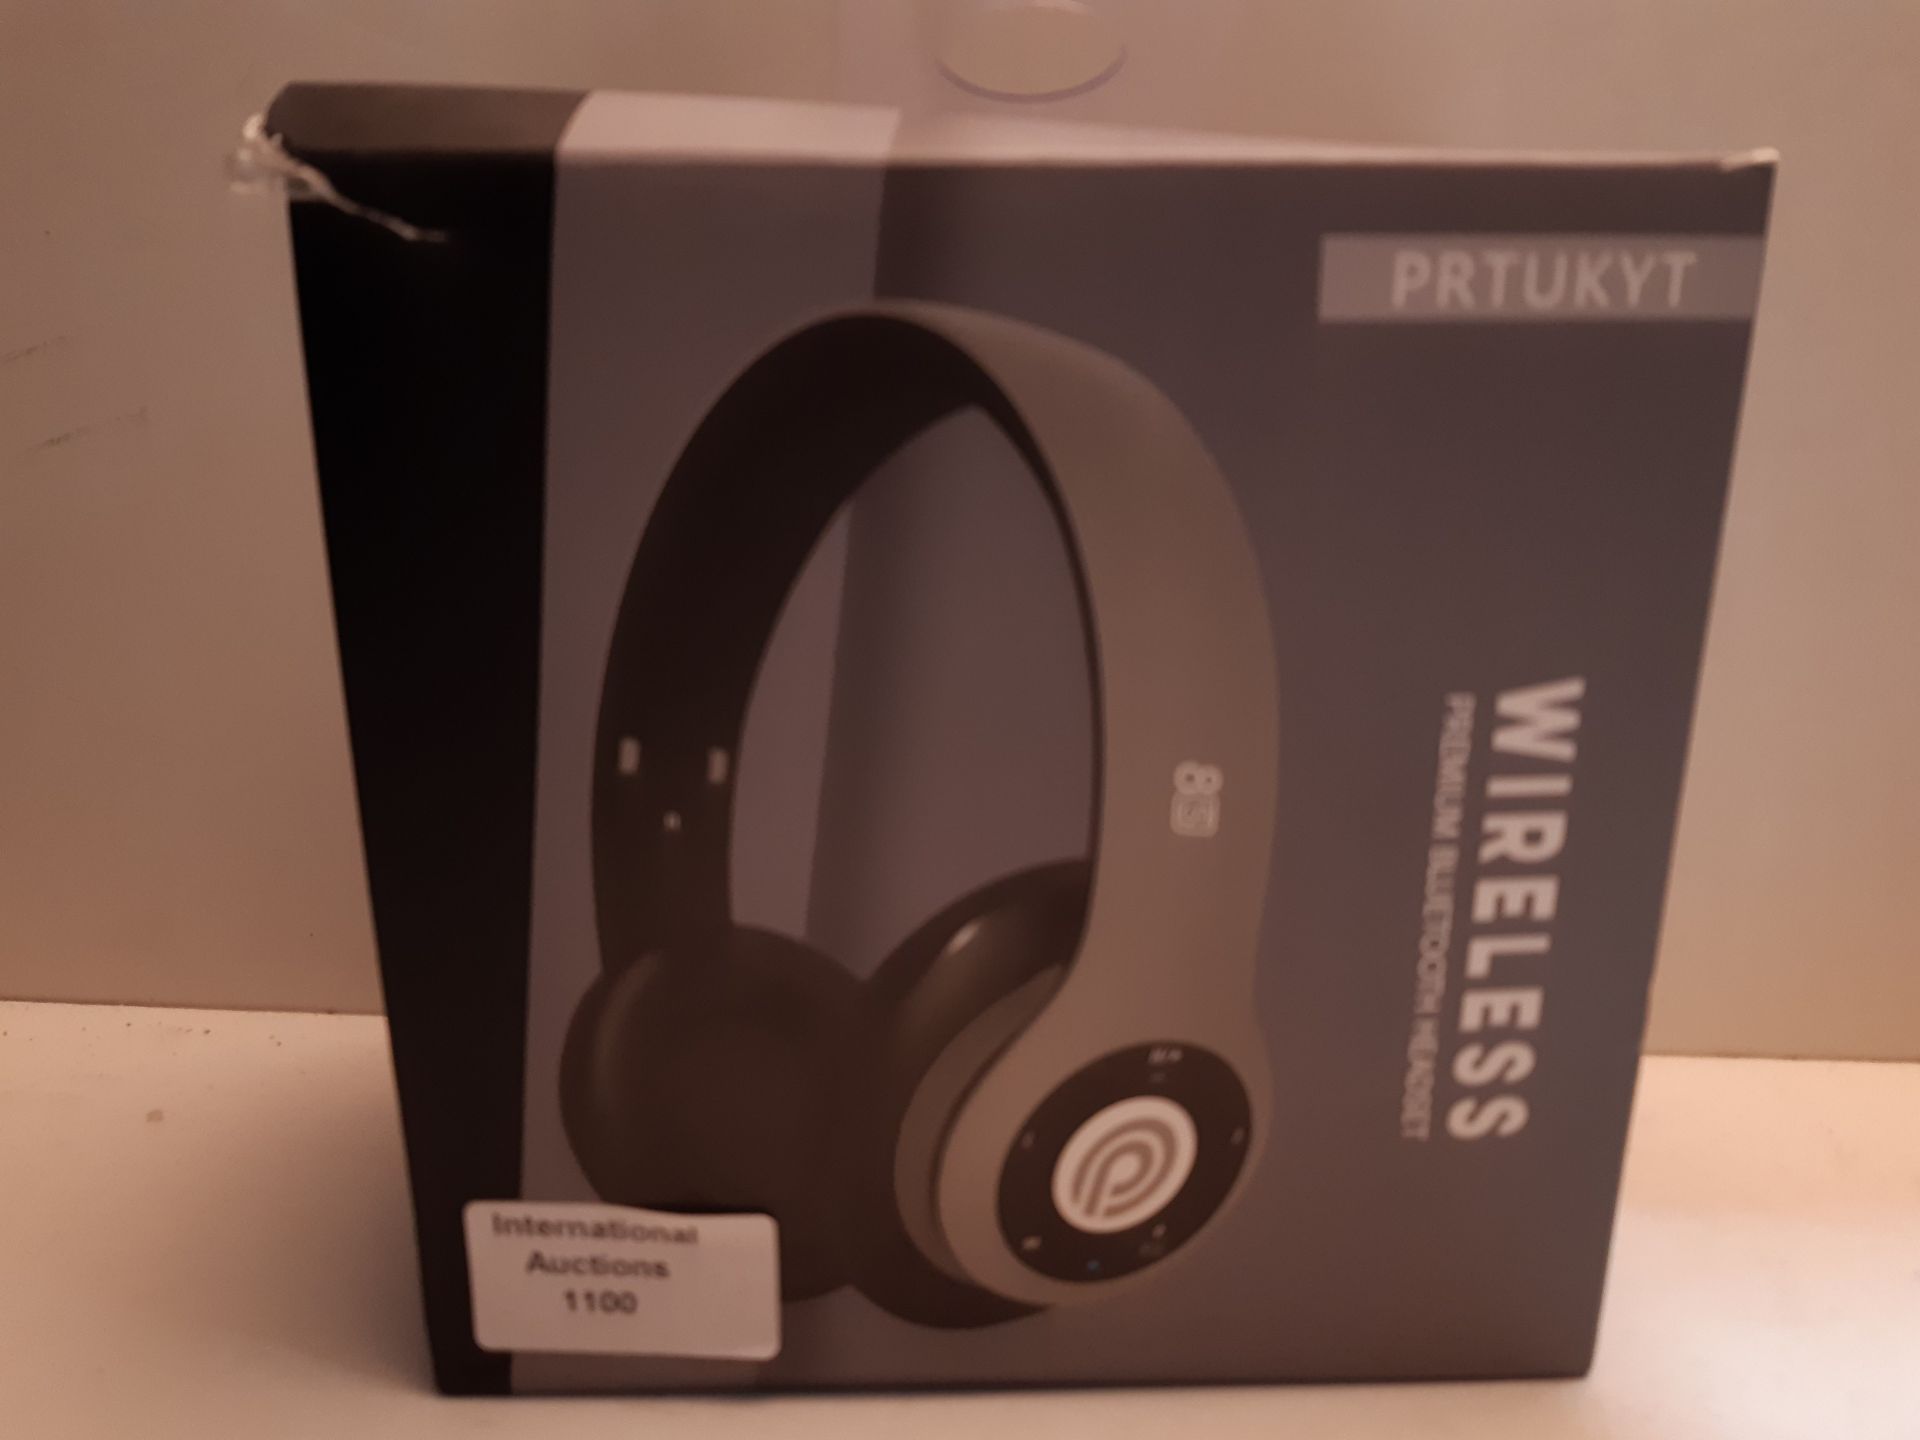 RRP £14.44 Prtukyt Wireless Headphones Over Ear - Image 2 of 2